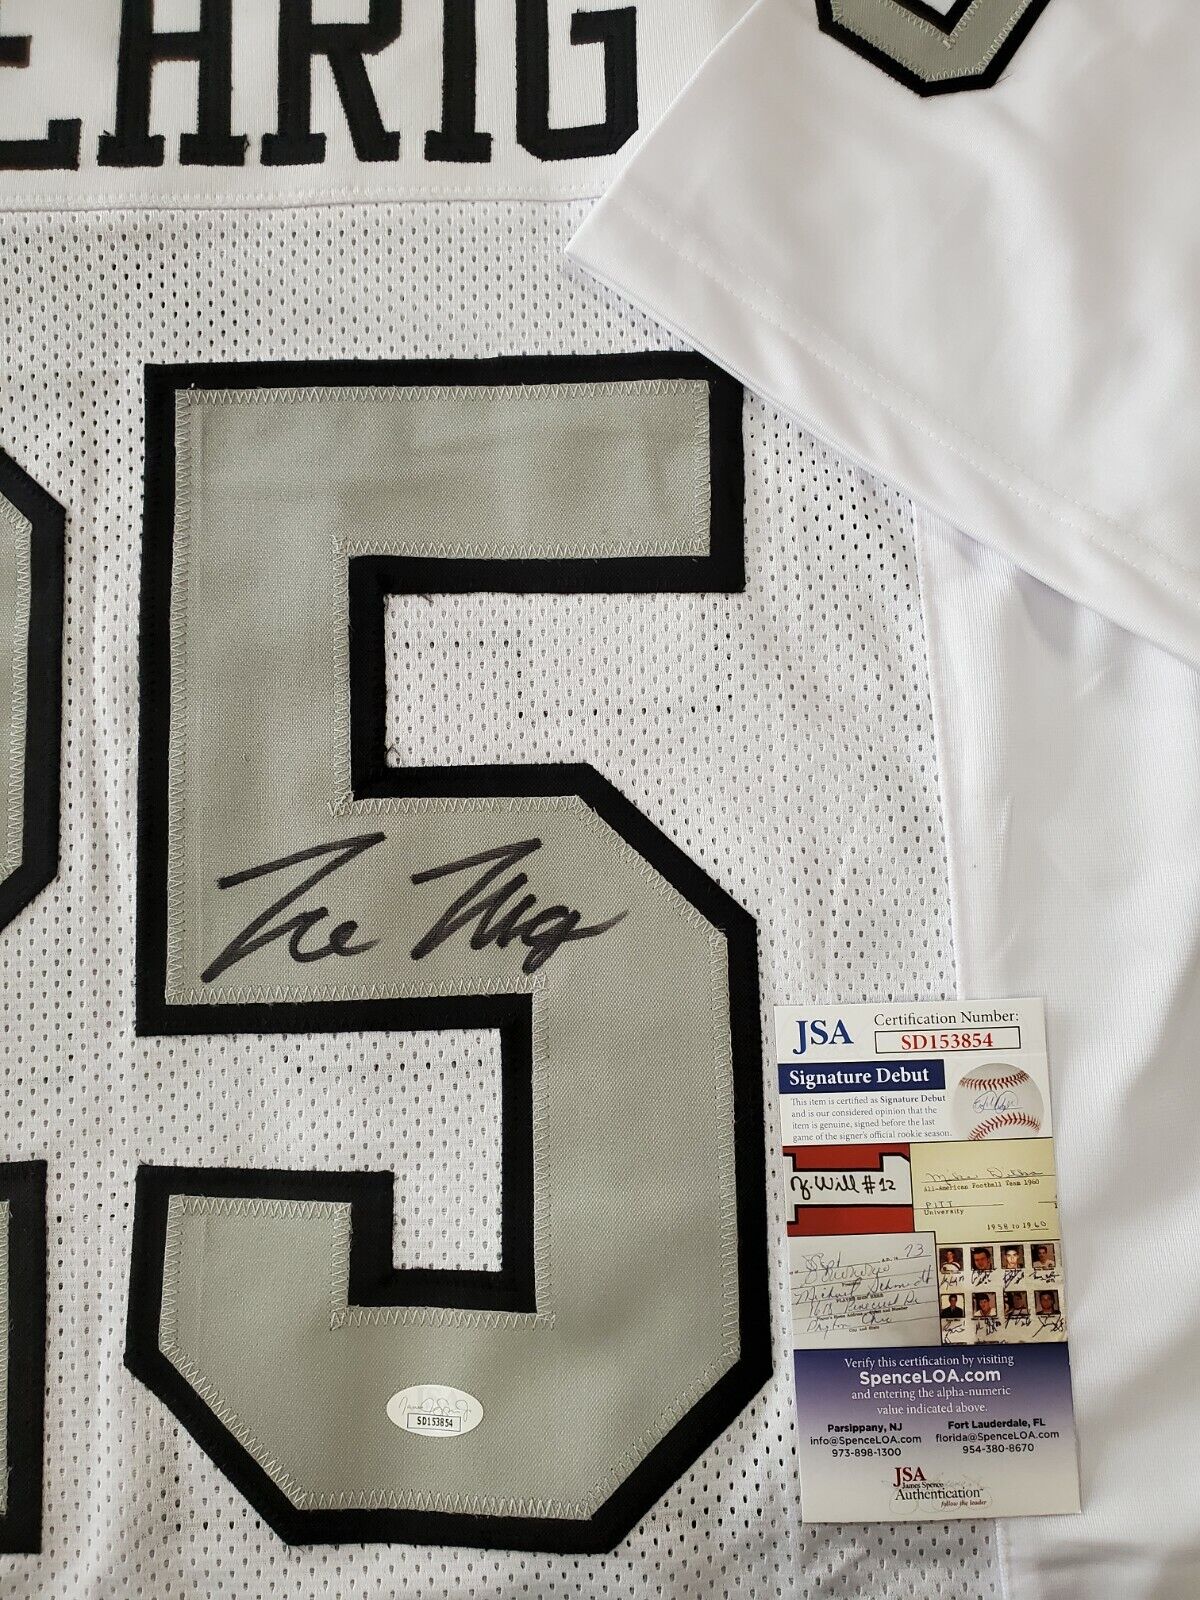 MVP Authentics Las Vegas Raiders Tre'von Moehrig Autographed Jersey Jsa Coa 144 sports jersey framing , jersey framing